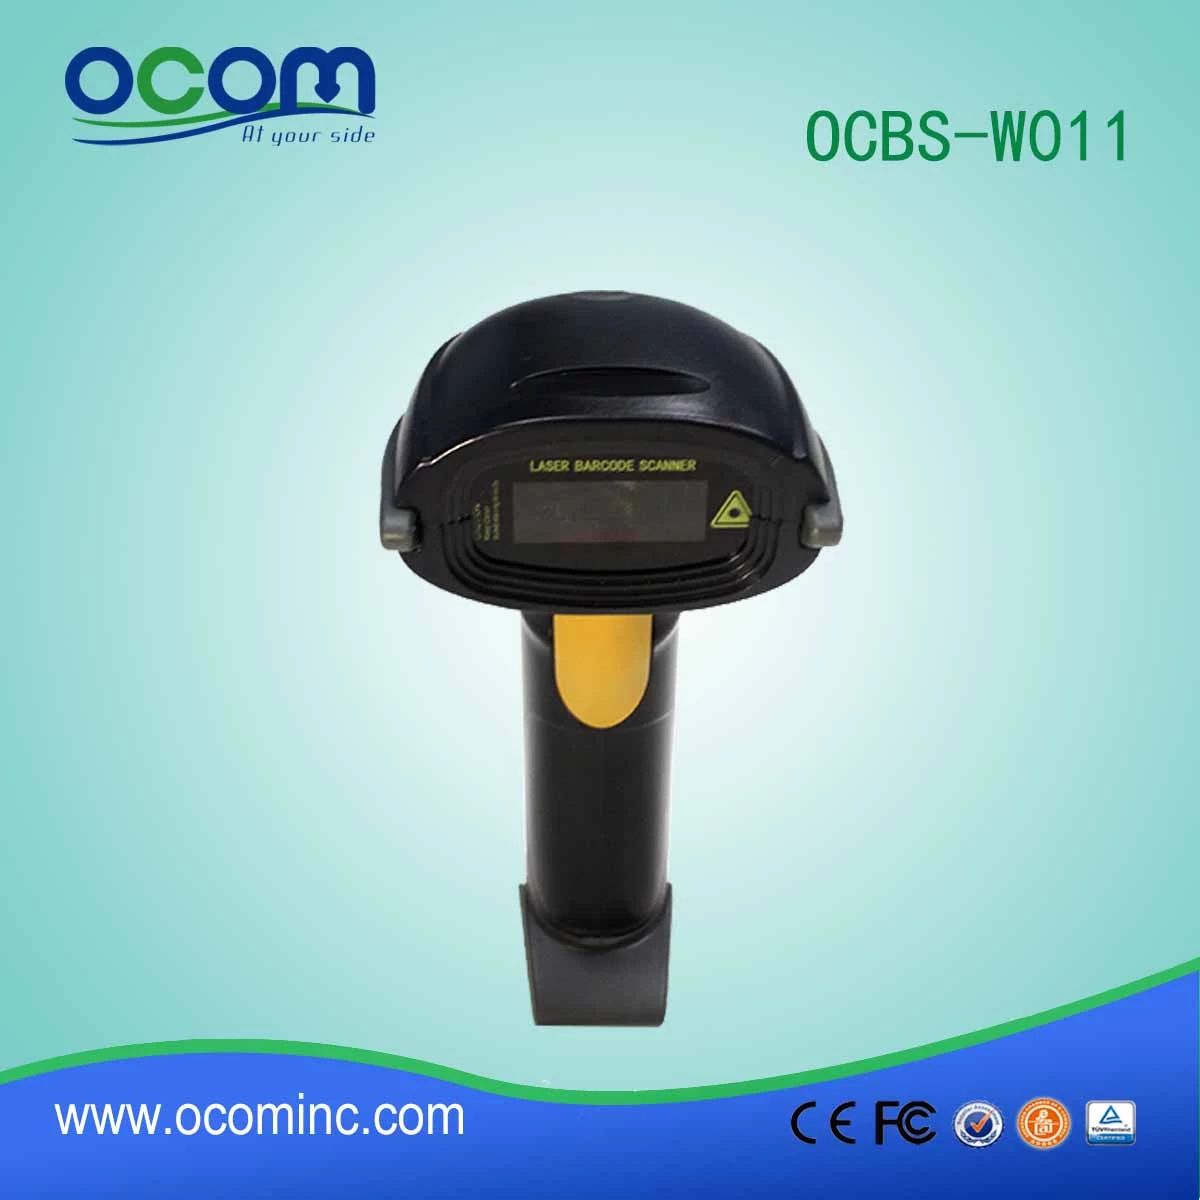 OCBS-W011 mini 433Mhz wireless barcode scanner with USB receiver